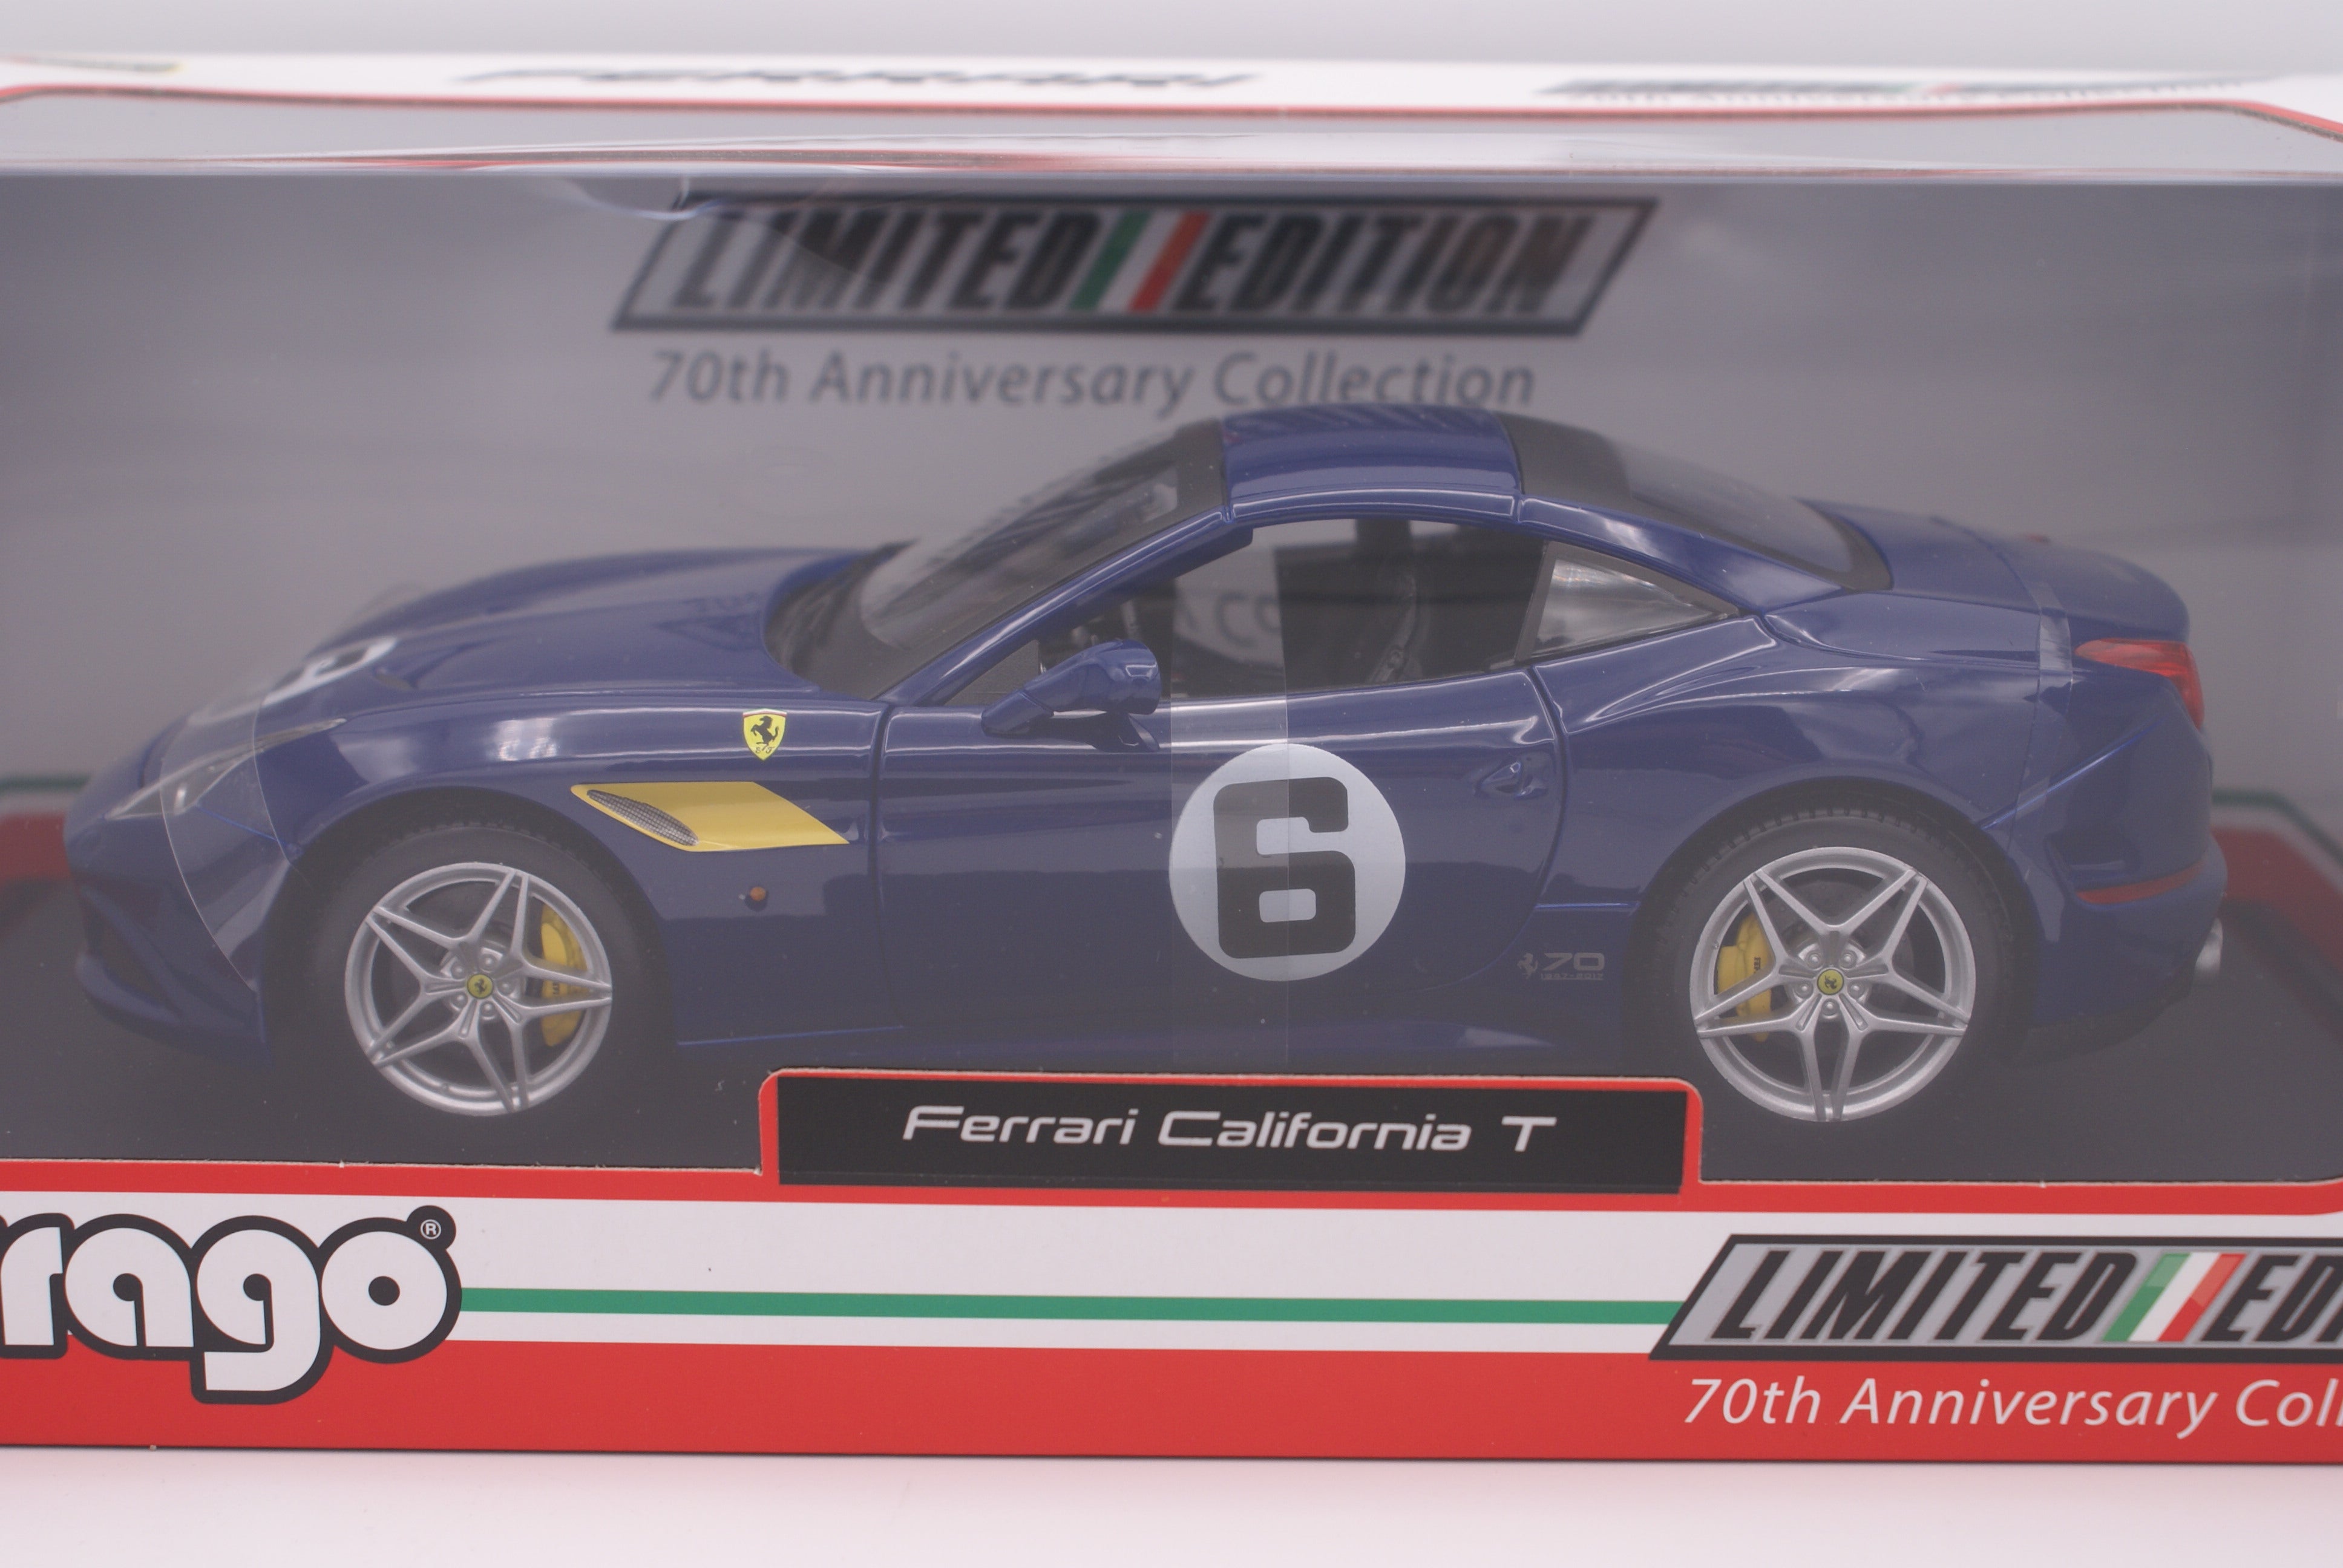 70th anniversary Ferrari California T